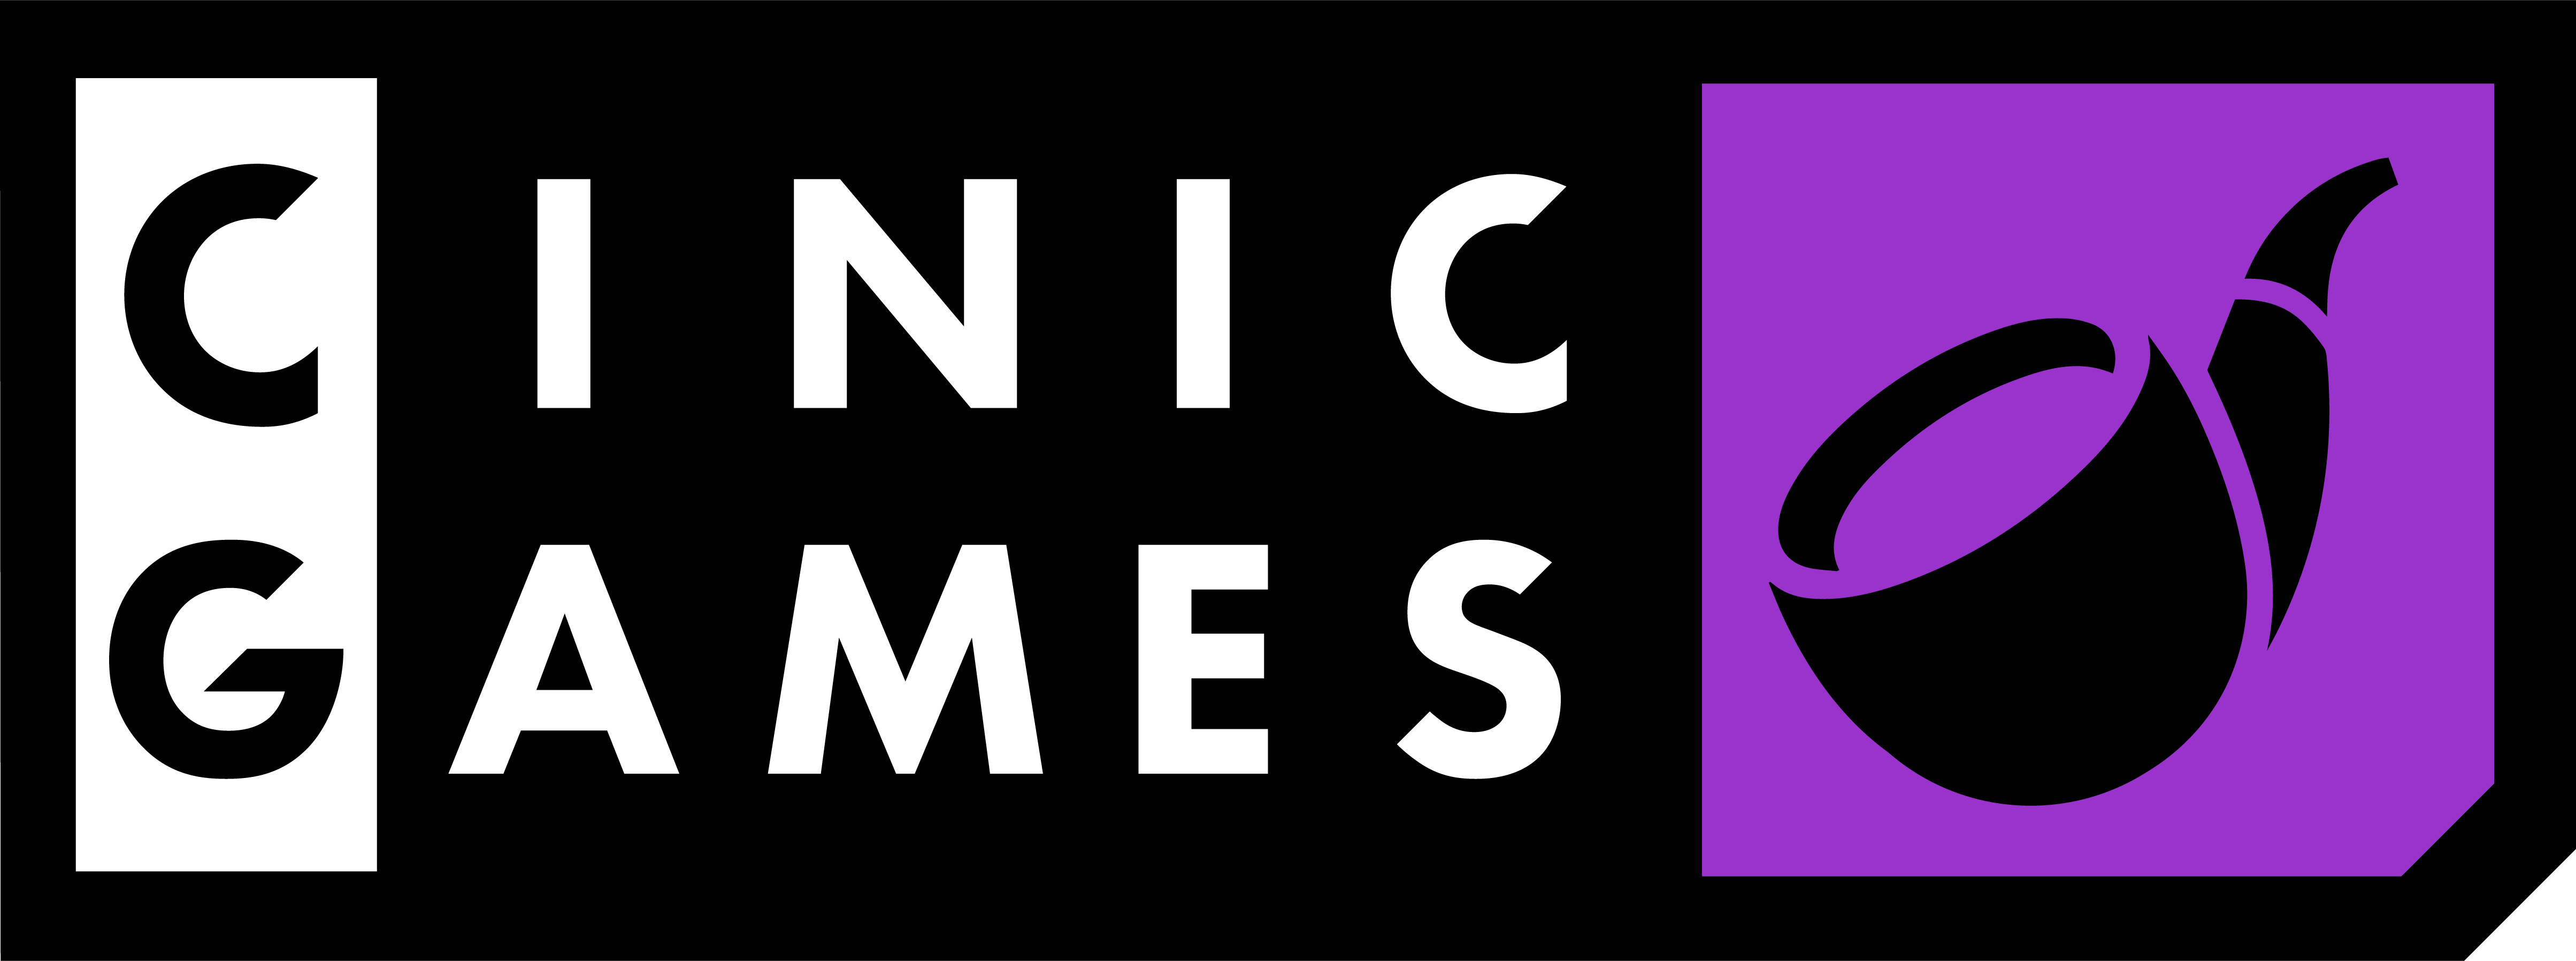 cinic_games_logo_horizontal